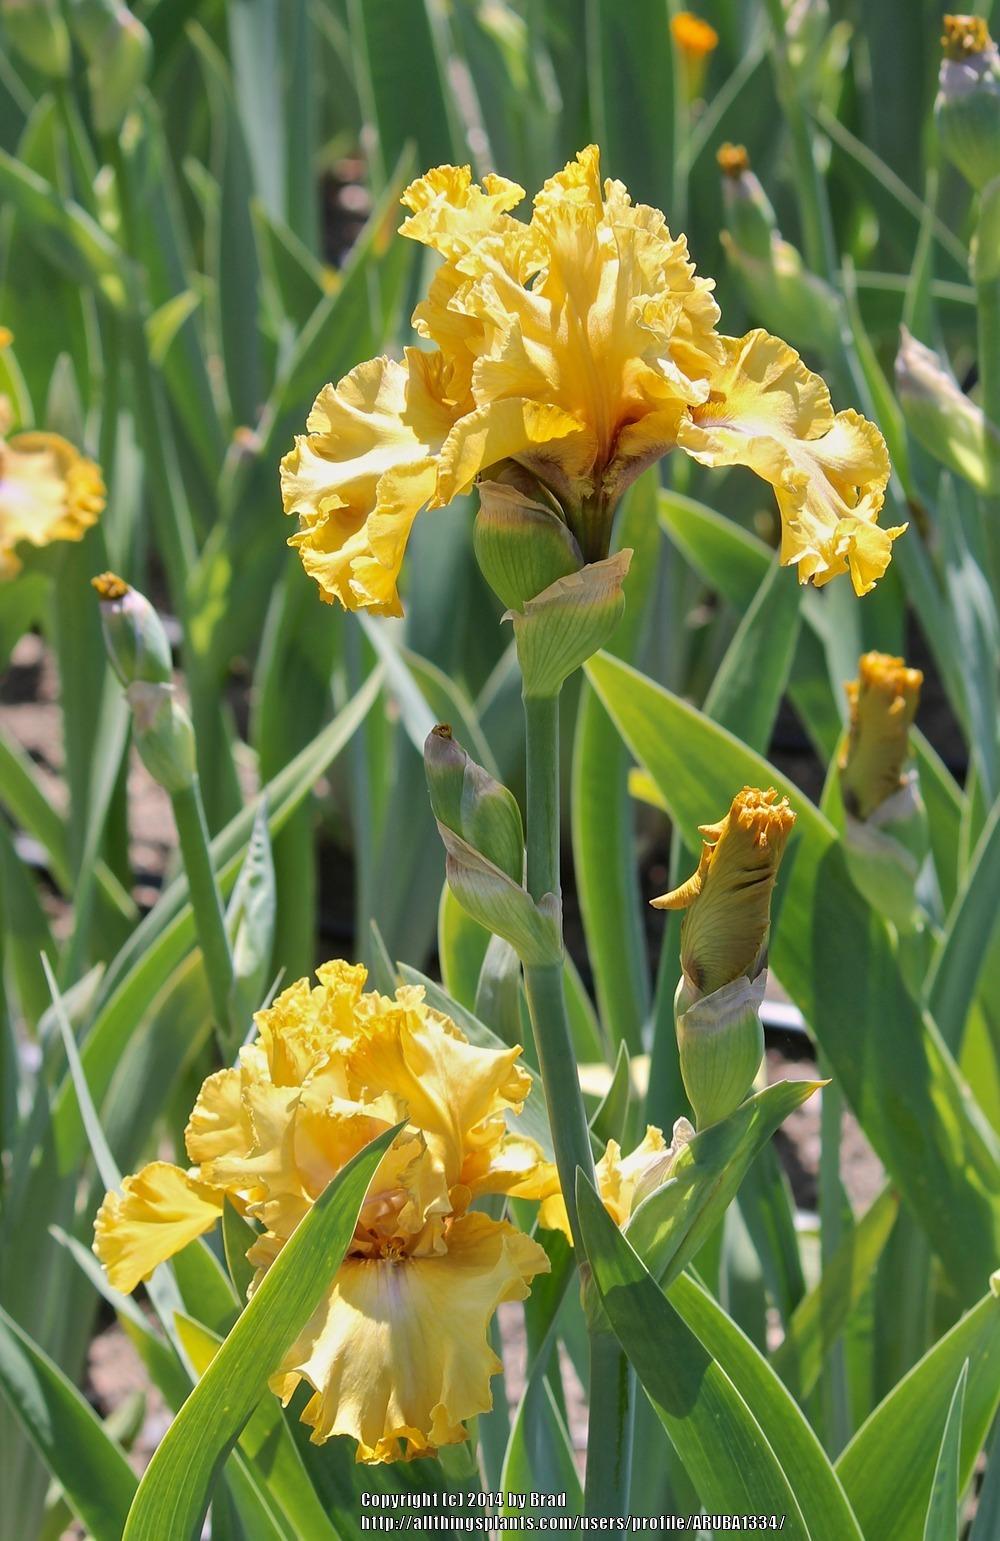 Photo of Tall Bearded Iris (Iris 'Bamboo Shadows') uploaded by ARUBA1334